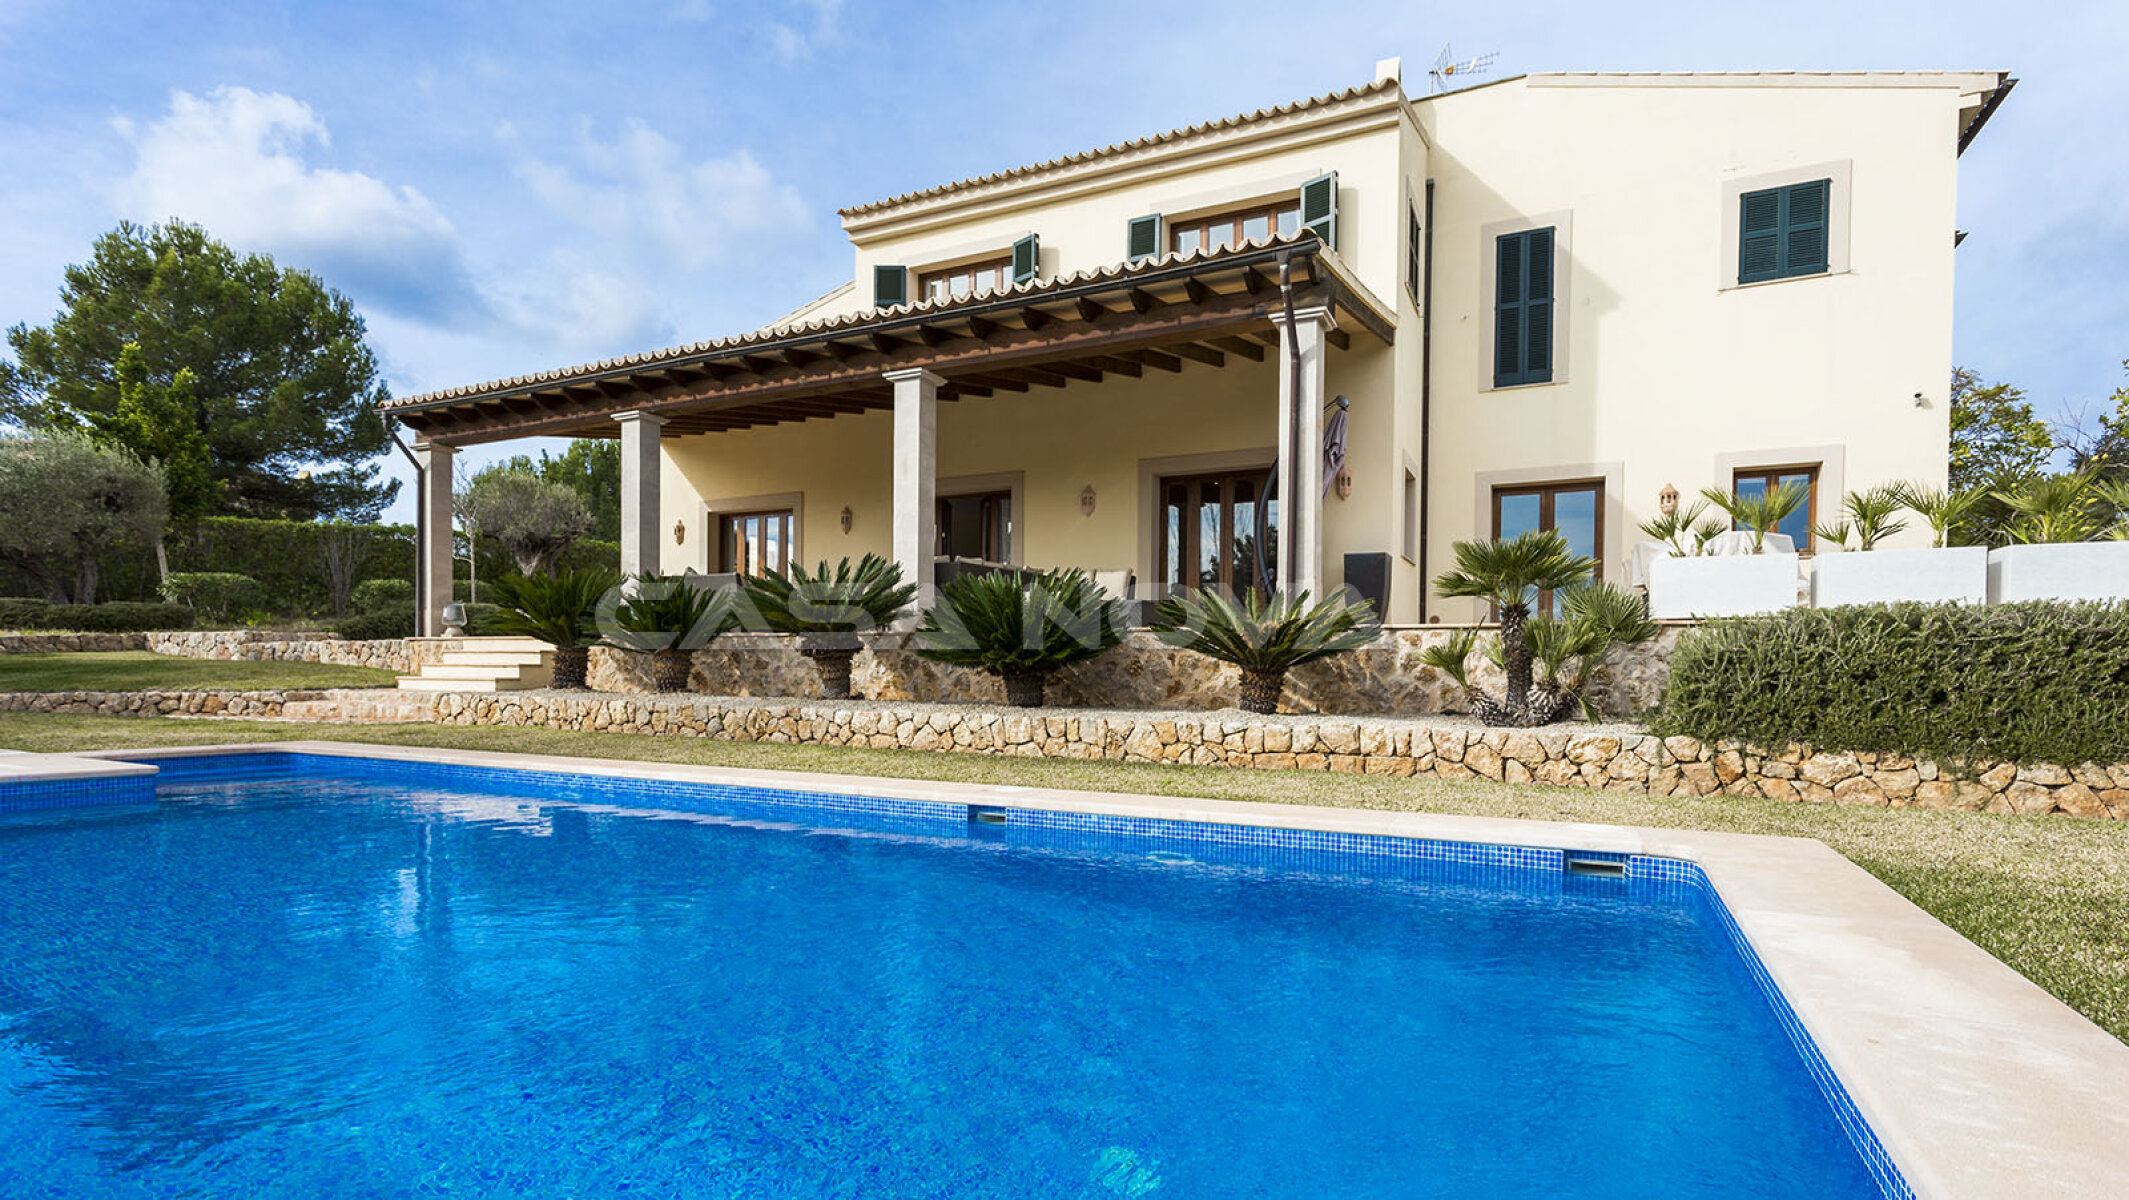 Mediterranean villa in popular and quiet location